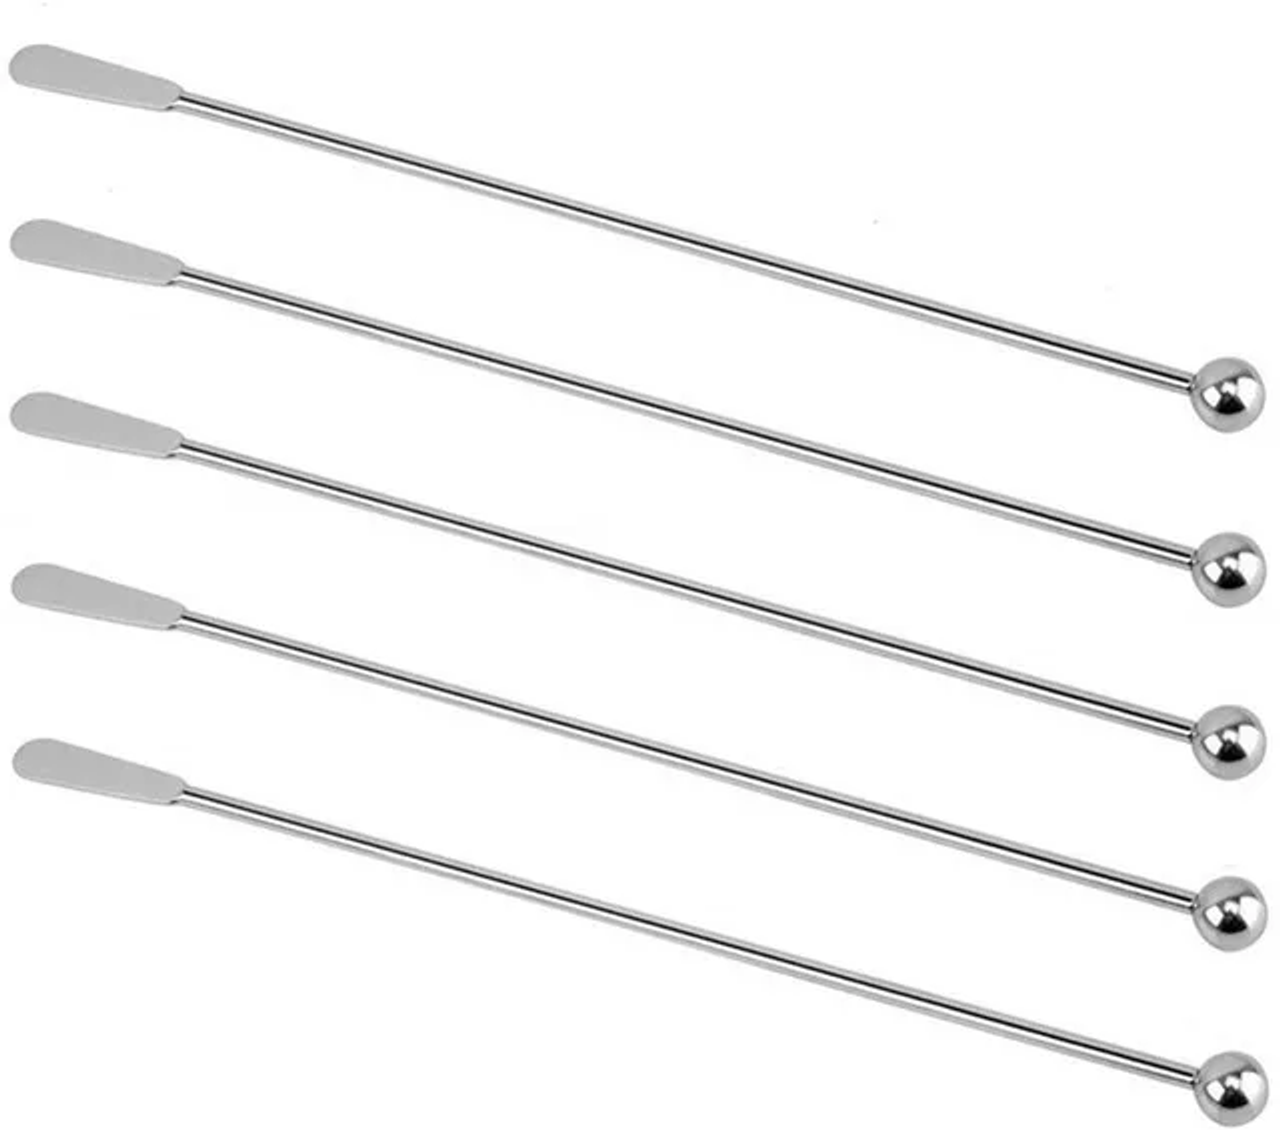 Metal Stir Sticks - 5 pack